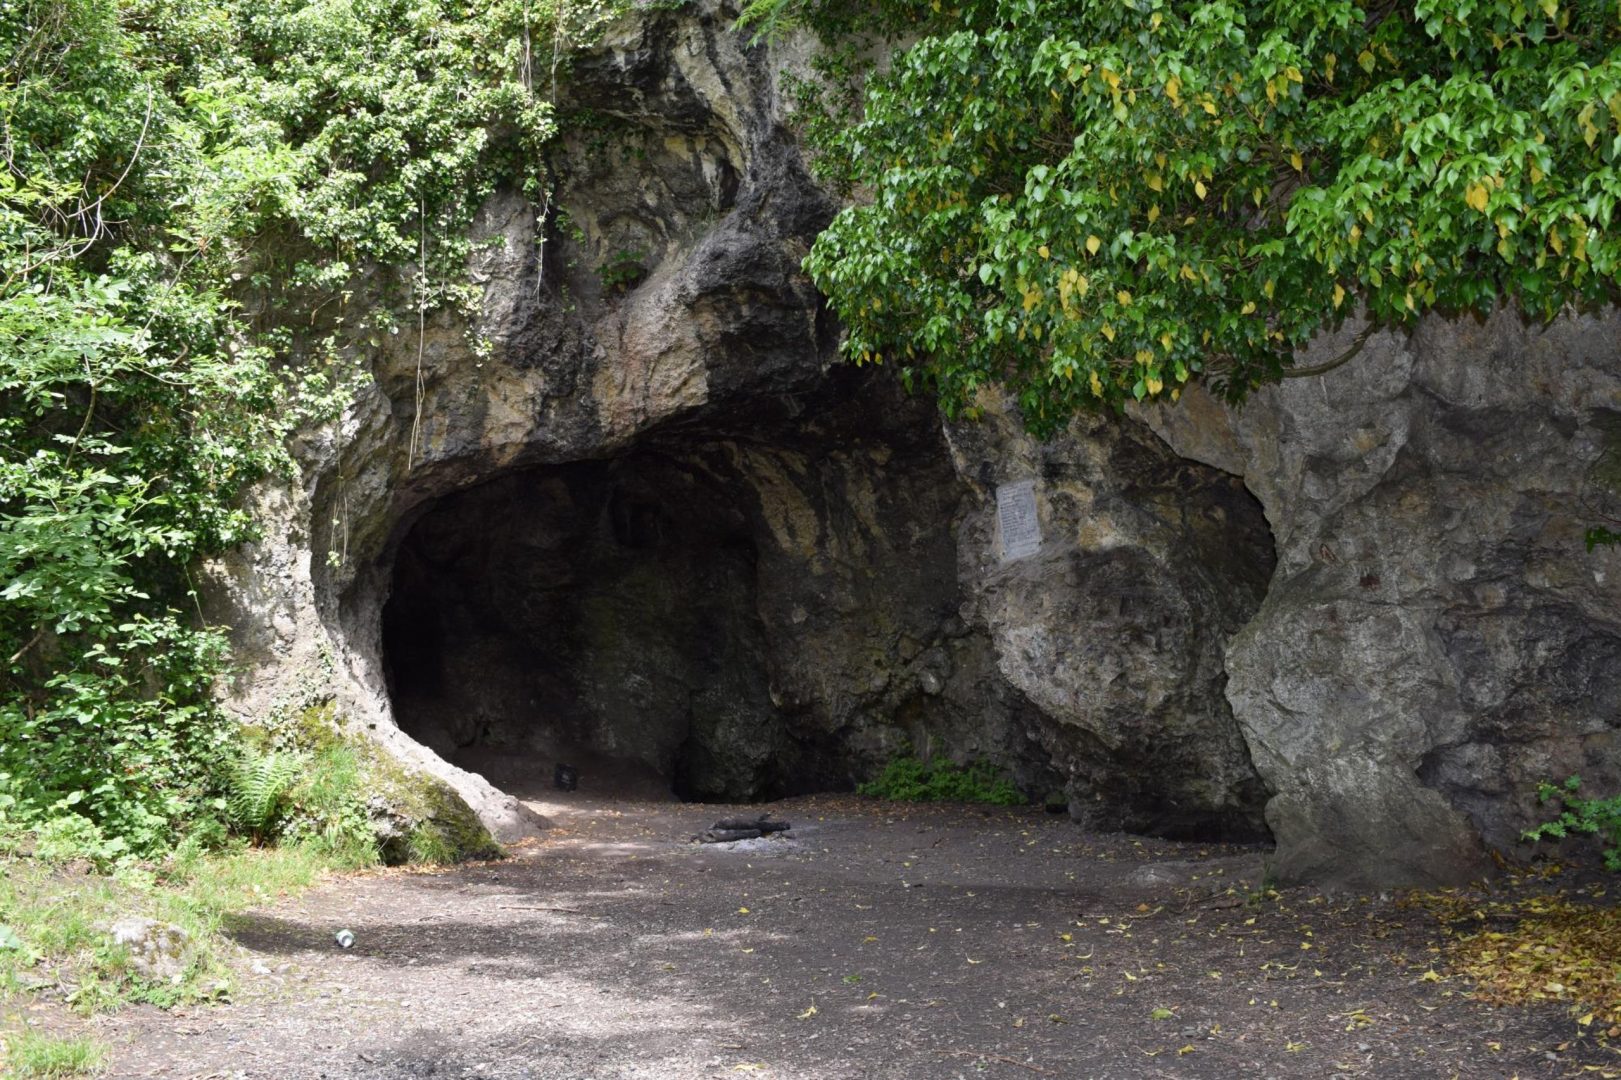 Spy Cave, Jemeppe-sur-Sambre, Belgium